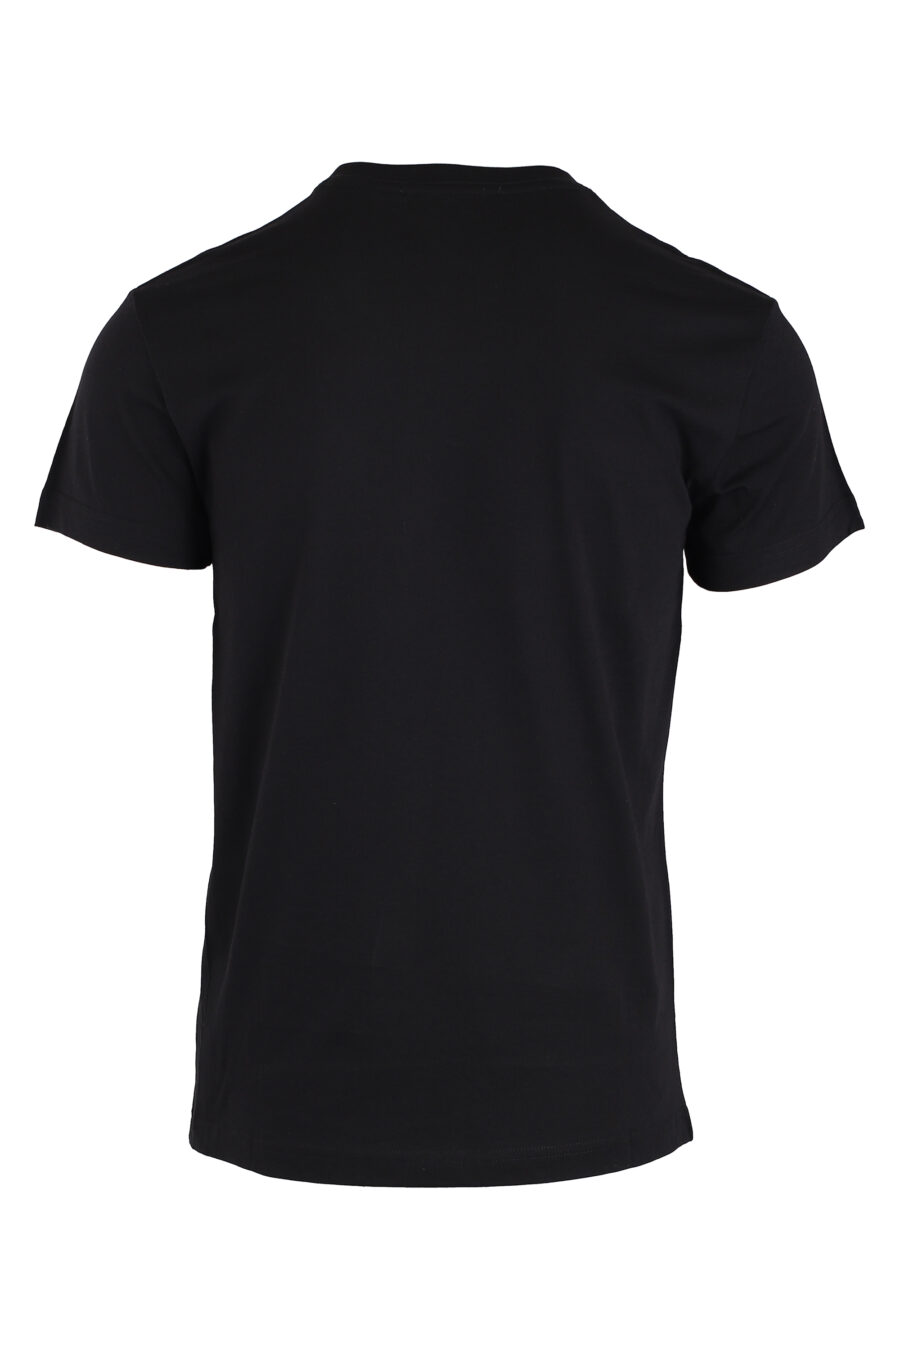 Camiseta negra con logo sello en plateado - IMG 4151